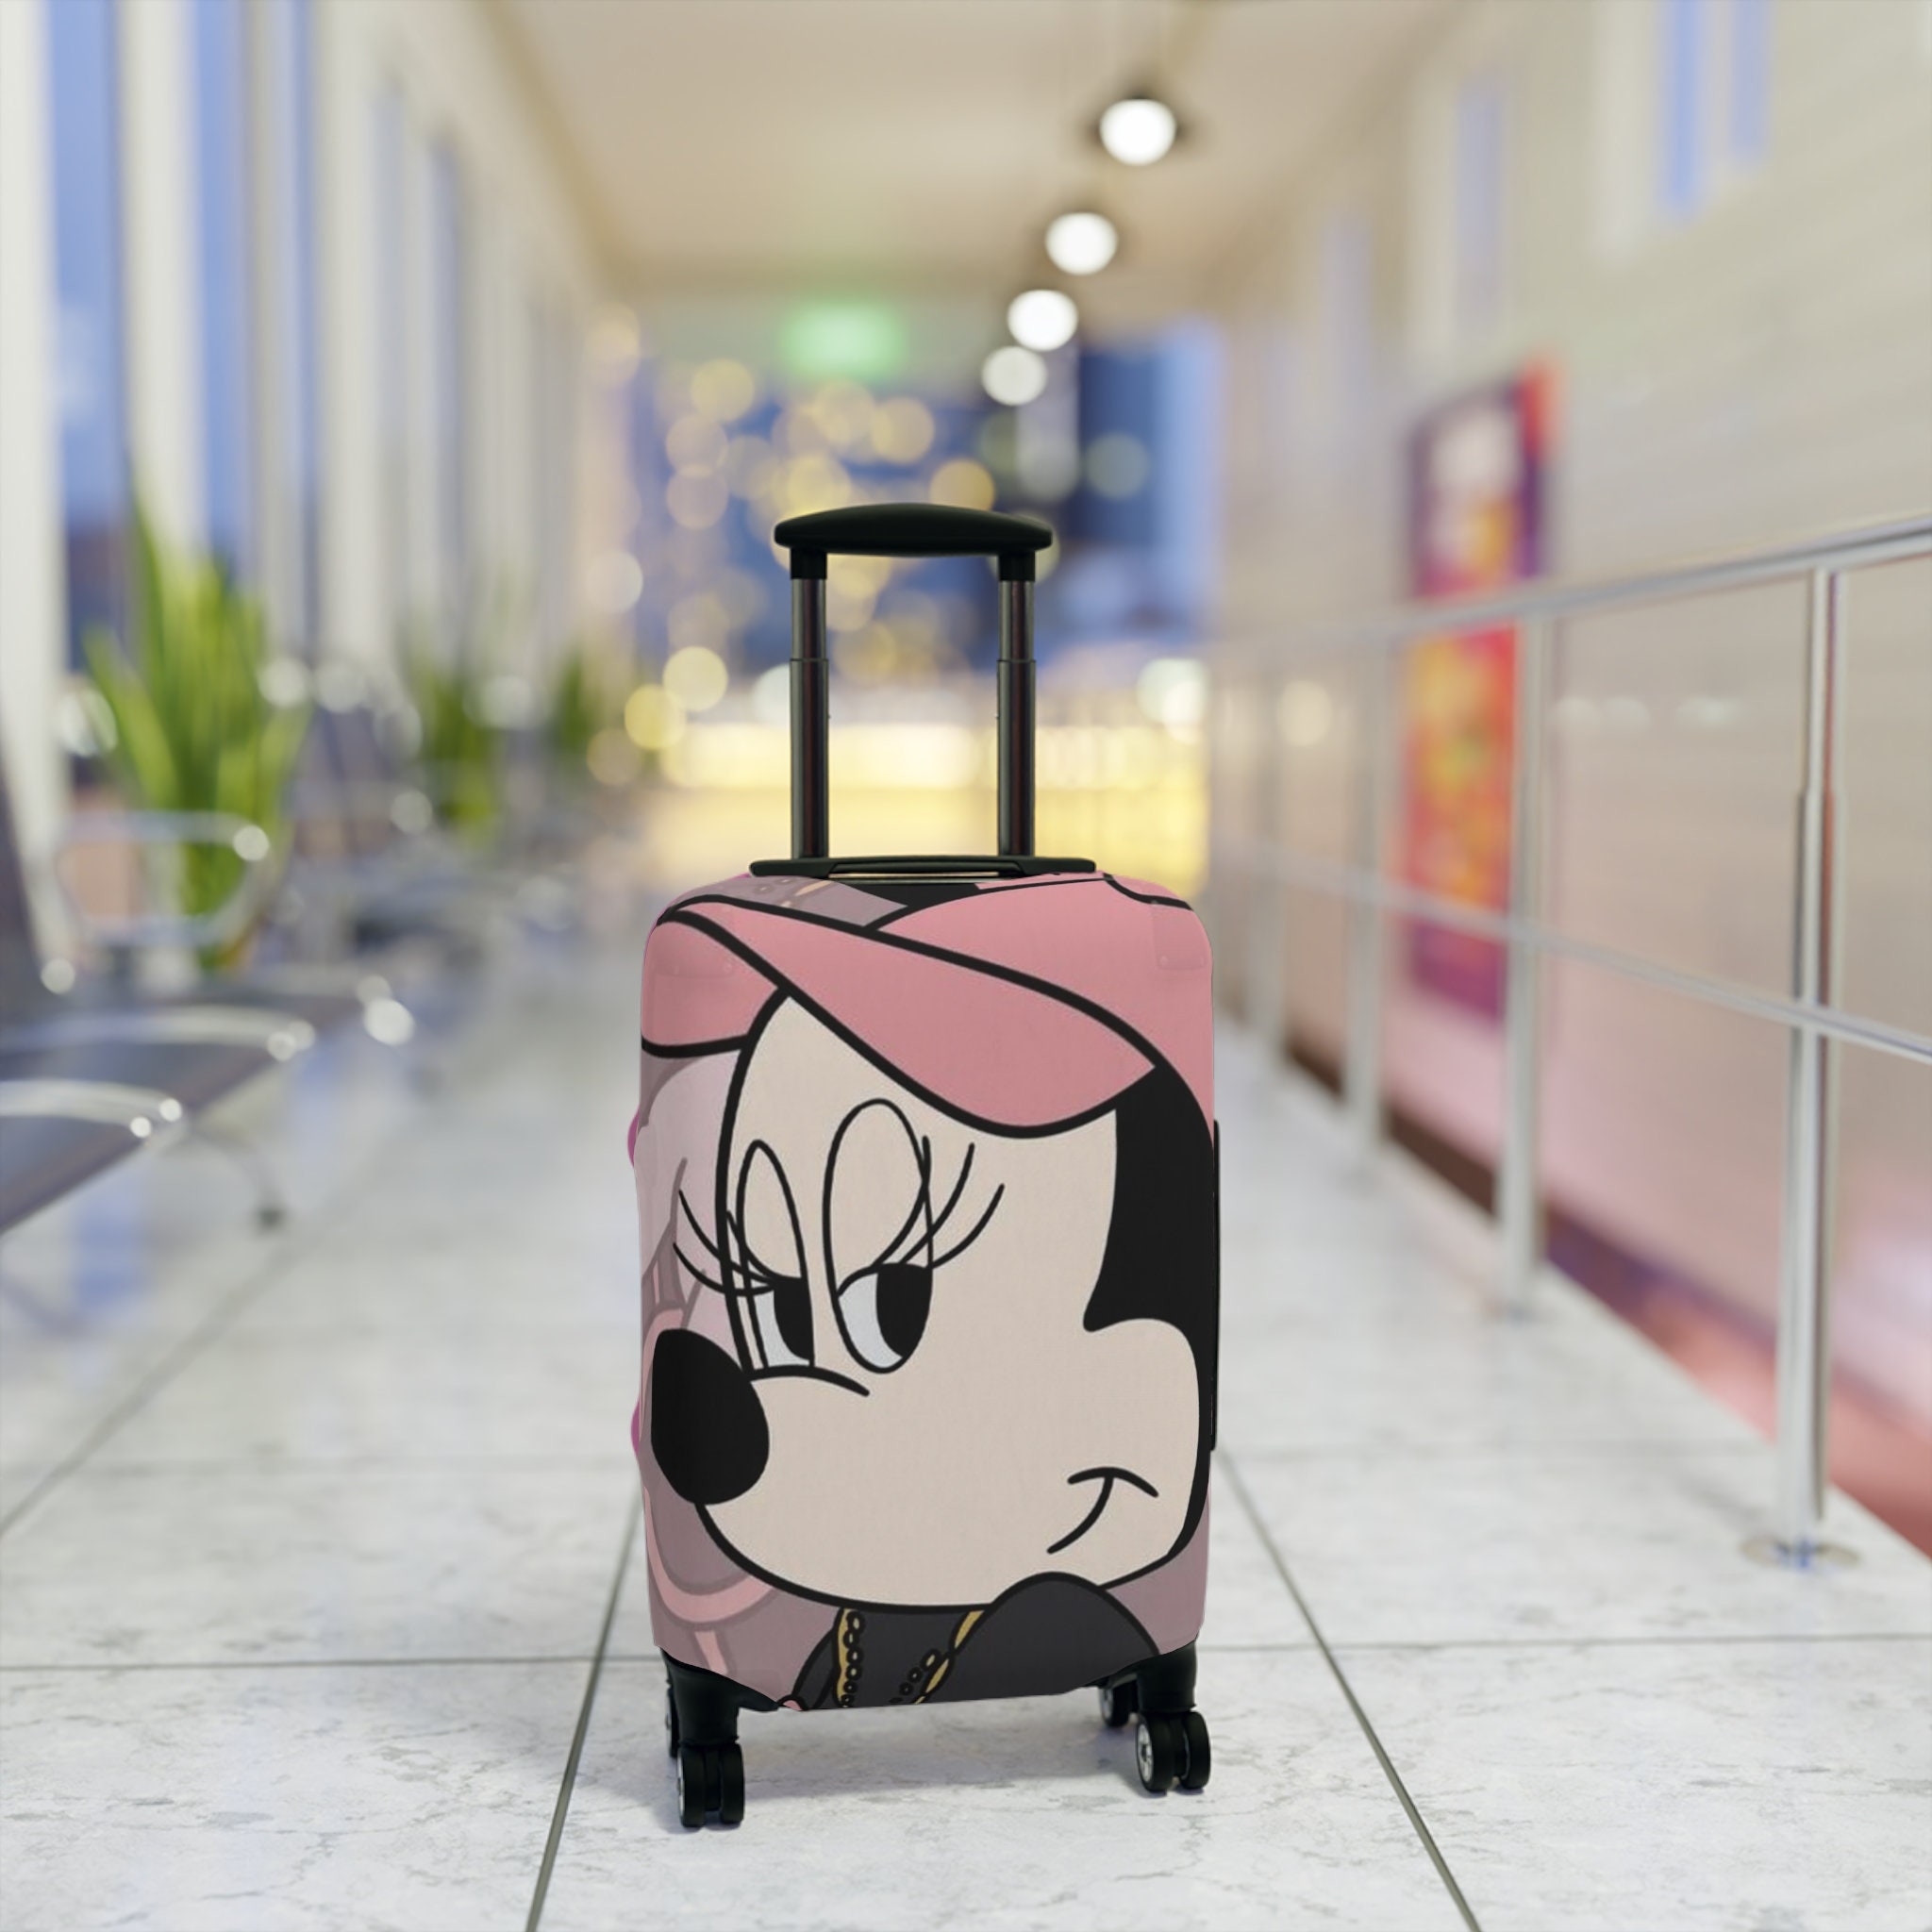 Disney's Minnie Mouse Luggage Cover, Magic Kingdom Luggage